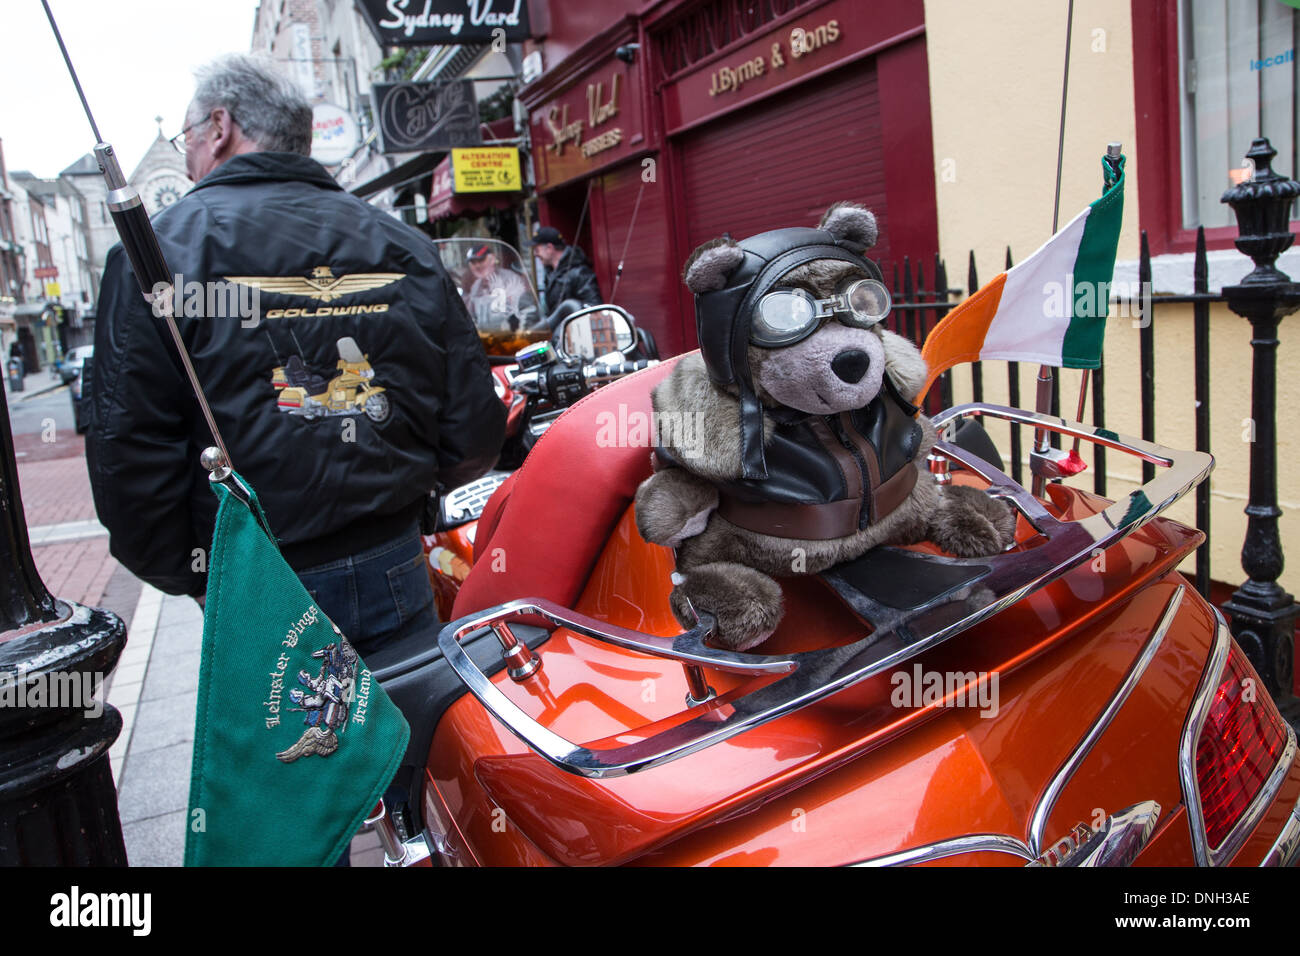 BIKER WITH HIS TEDDY BEAR, ANNE STREET, DUBLIN, IRELAND Stock Photo - Alamy